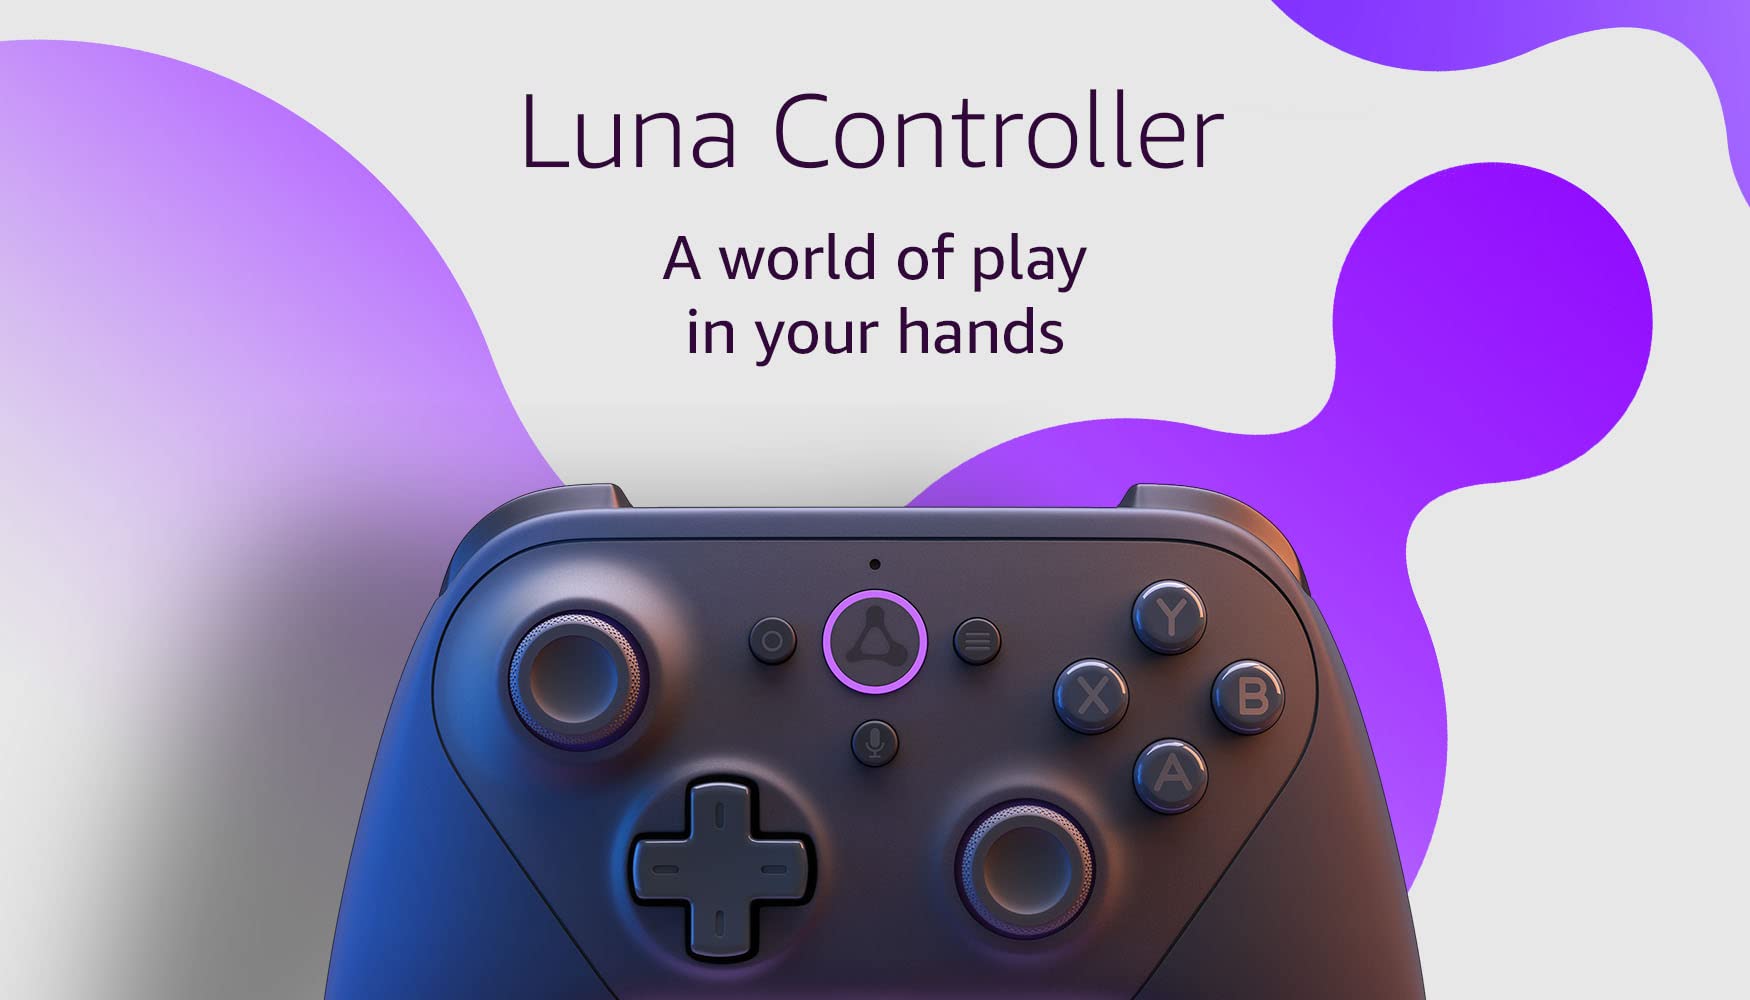 Official Luna Wireless Controller